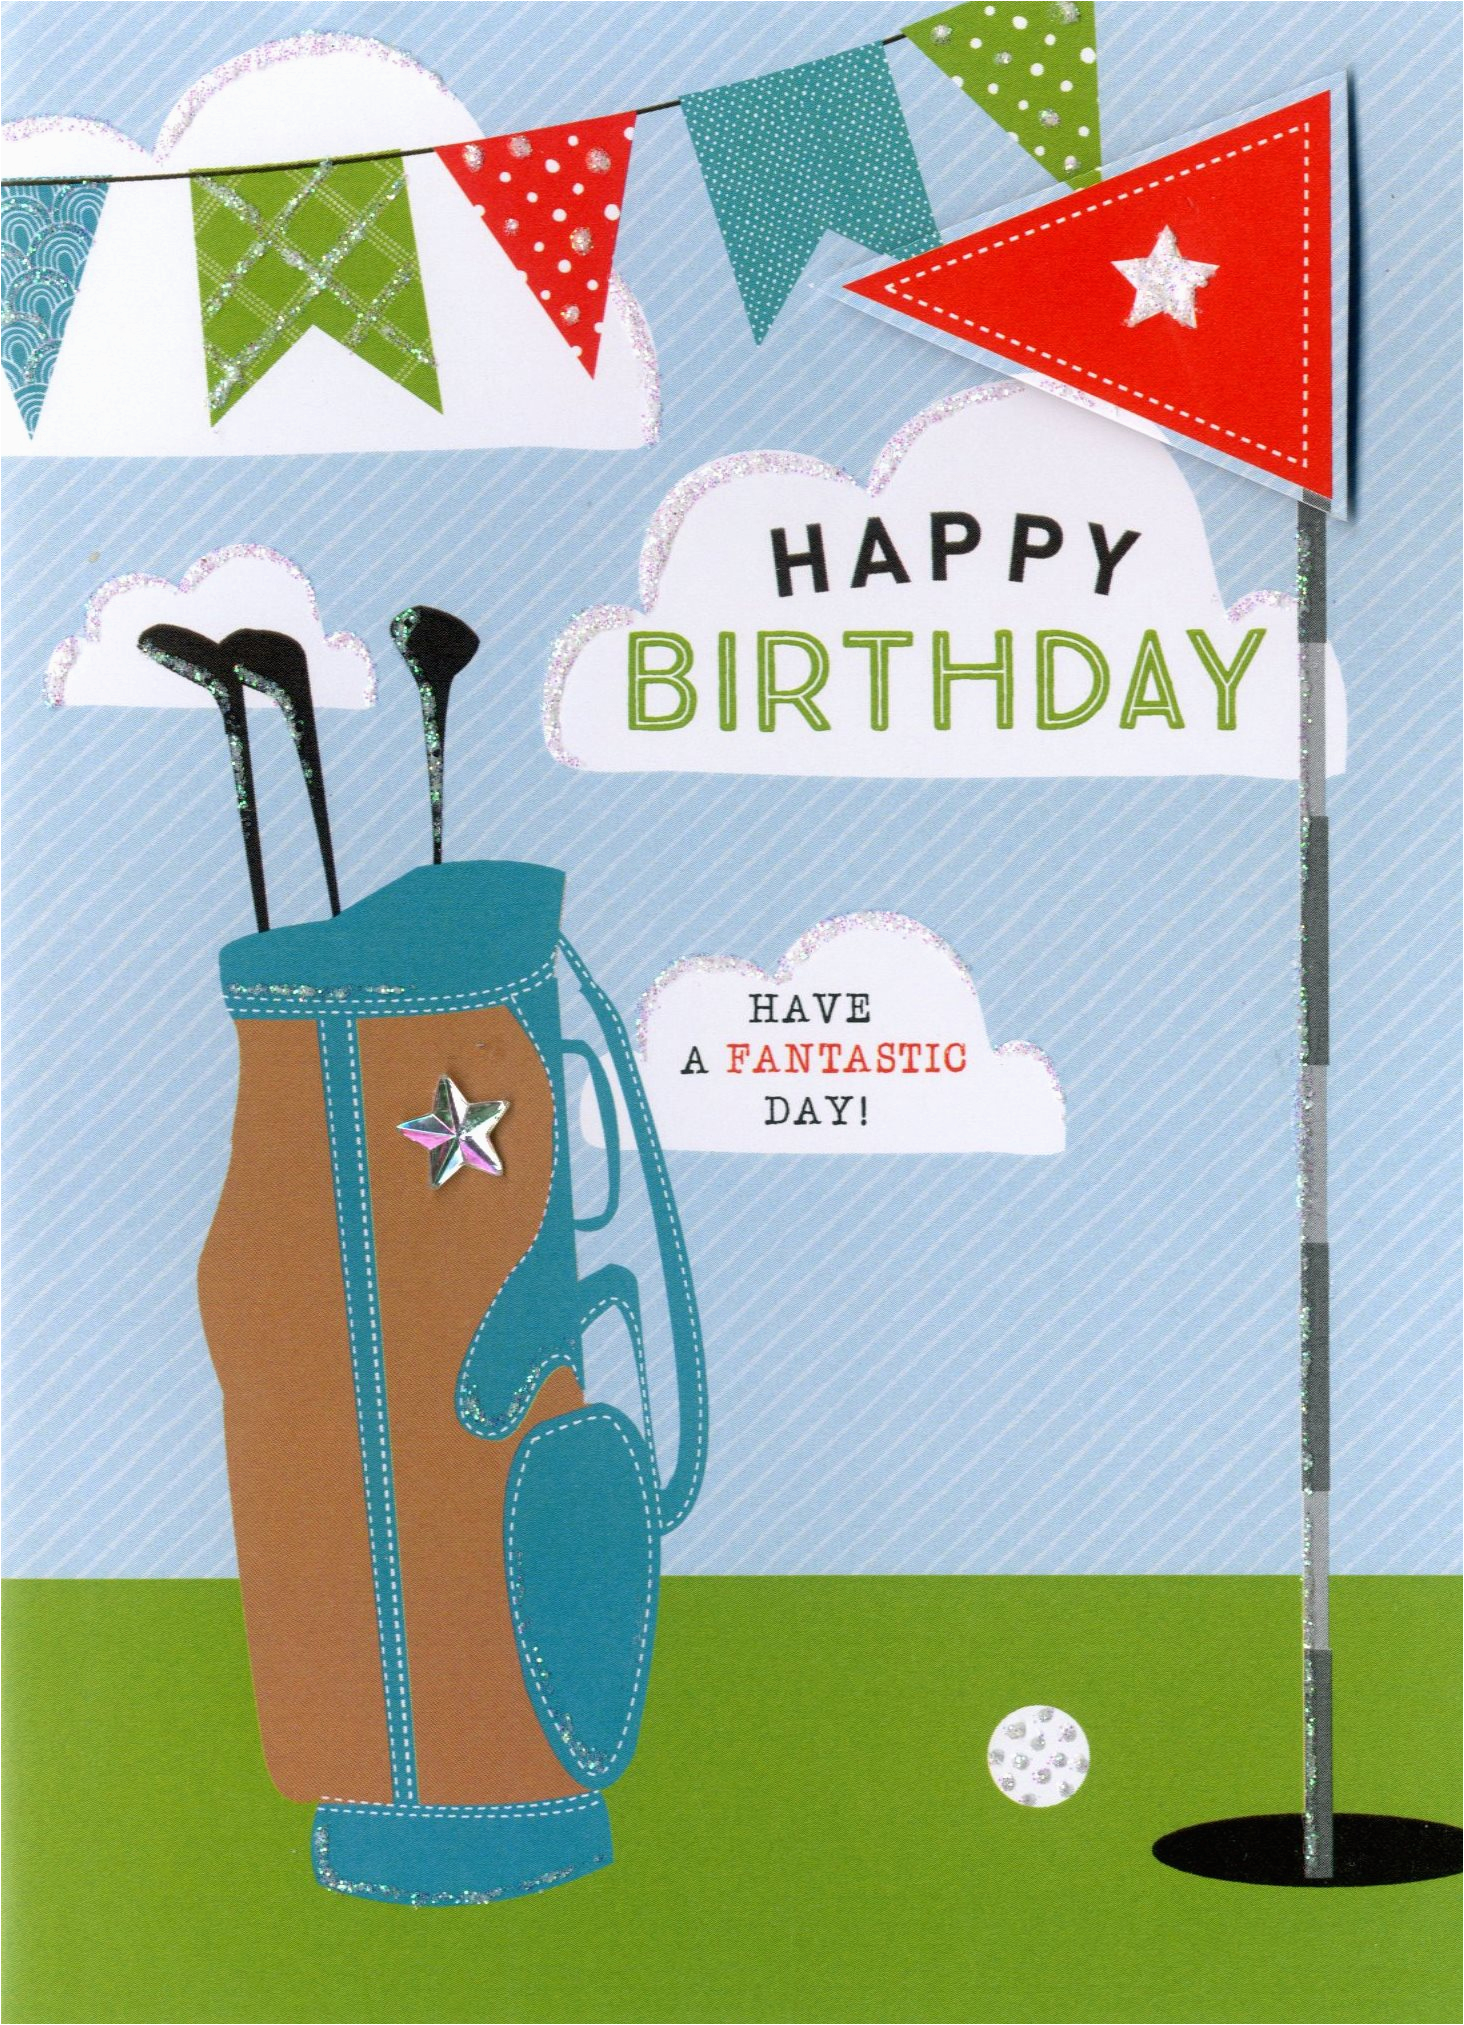 Birthday Cards for Golfers Happy Birthday Golf Greeting Card Cards